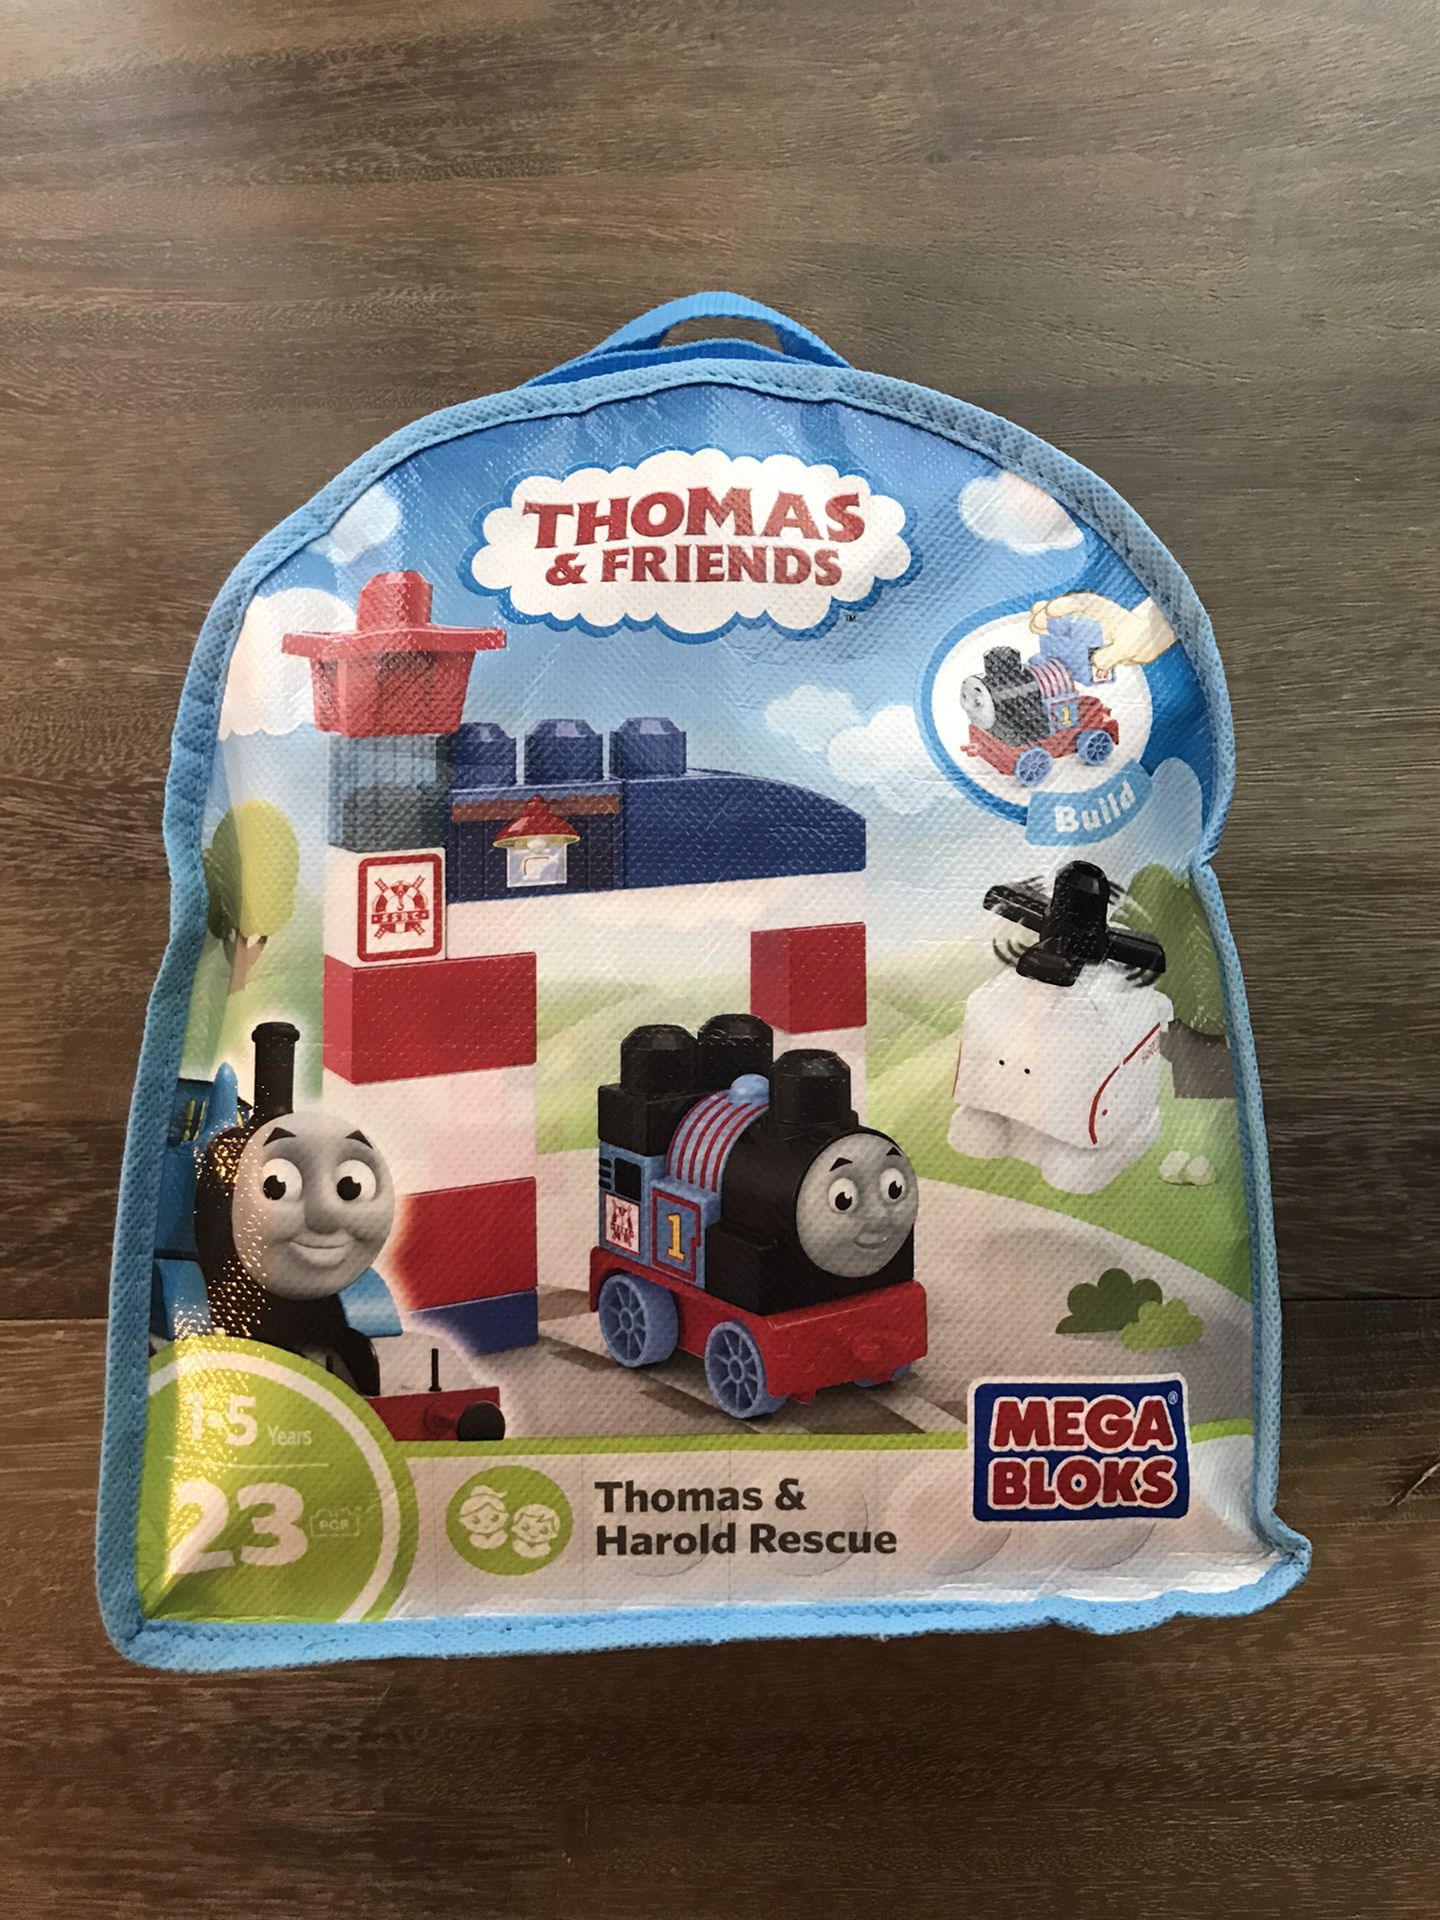 (Used)Mega blocks Thomas and Harold rescue23 piece set